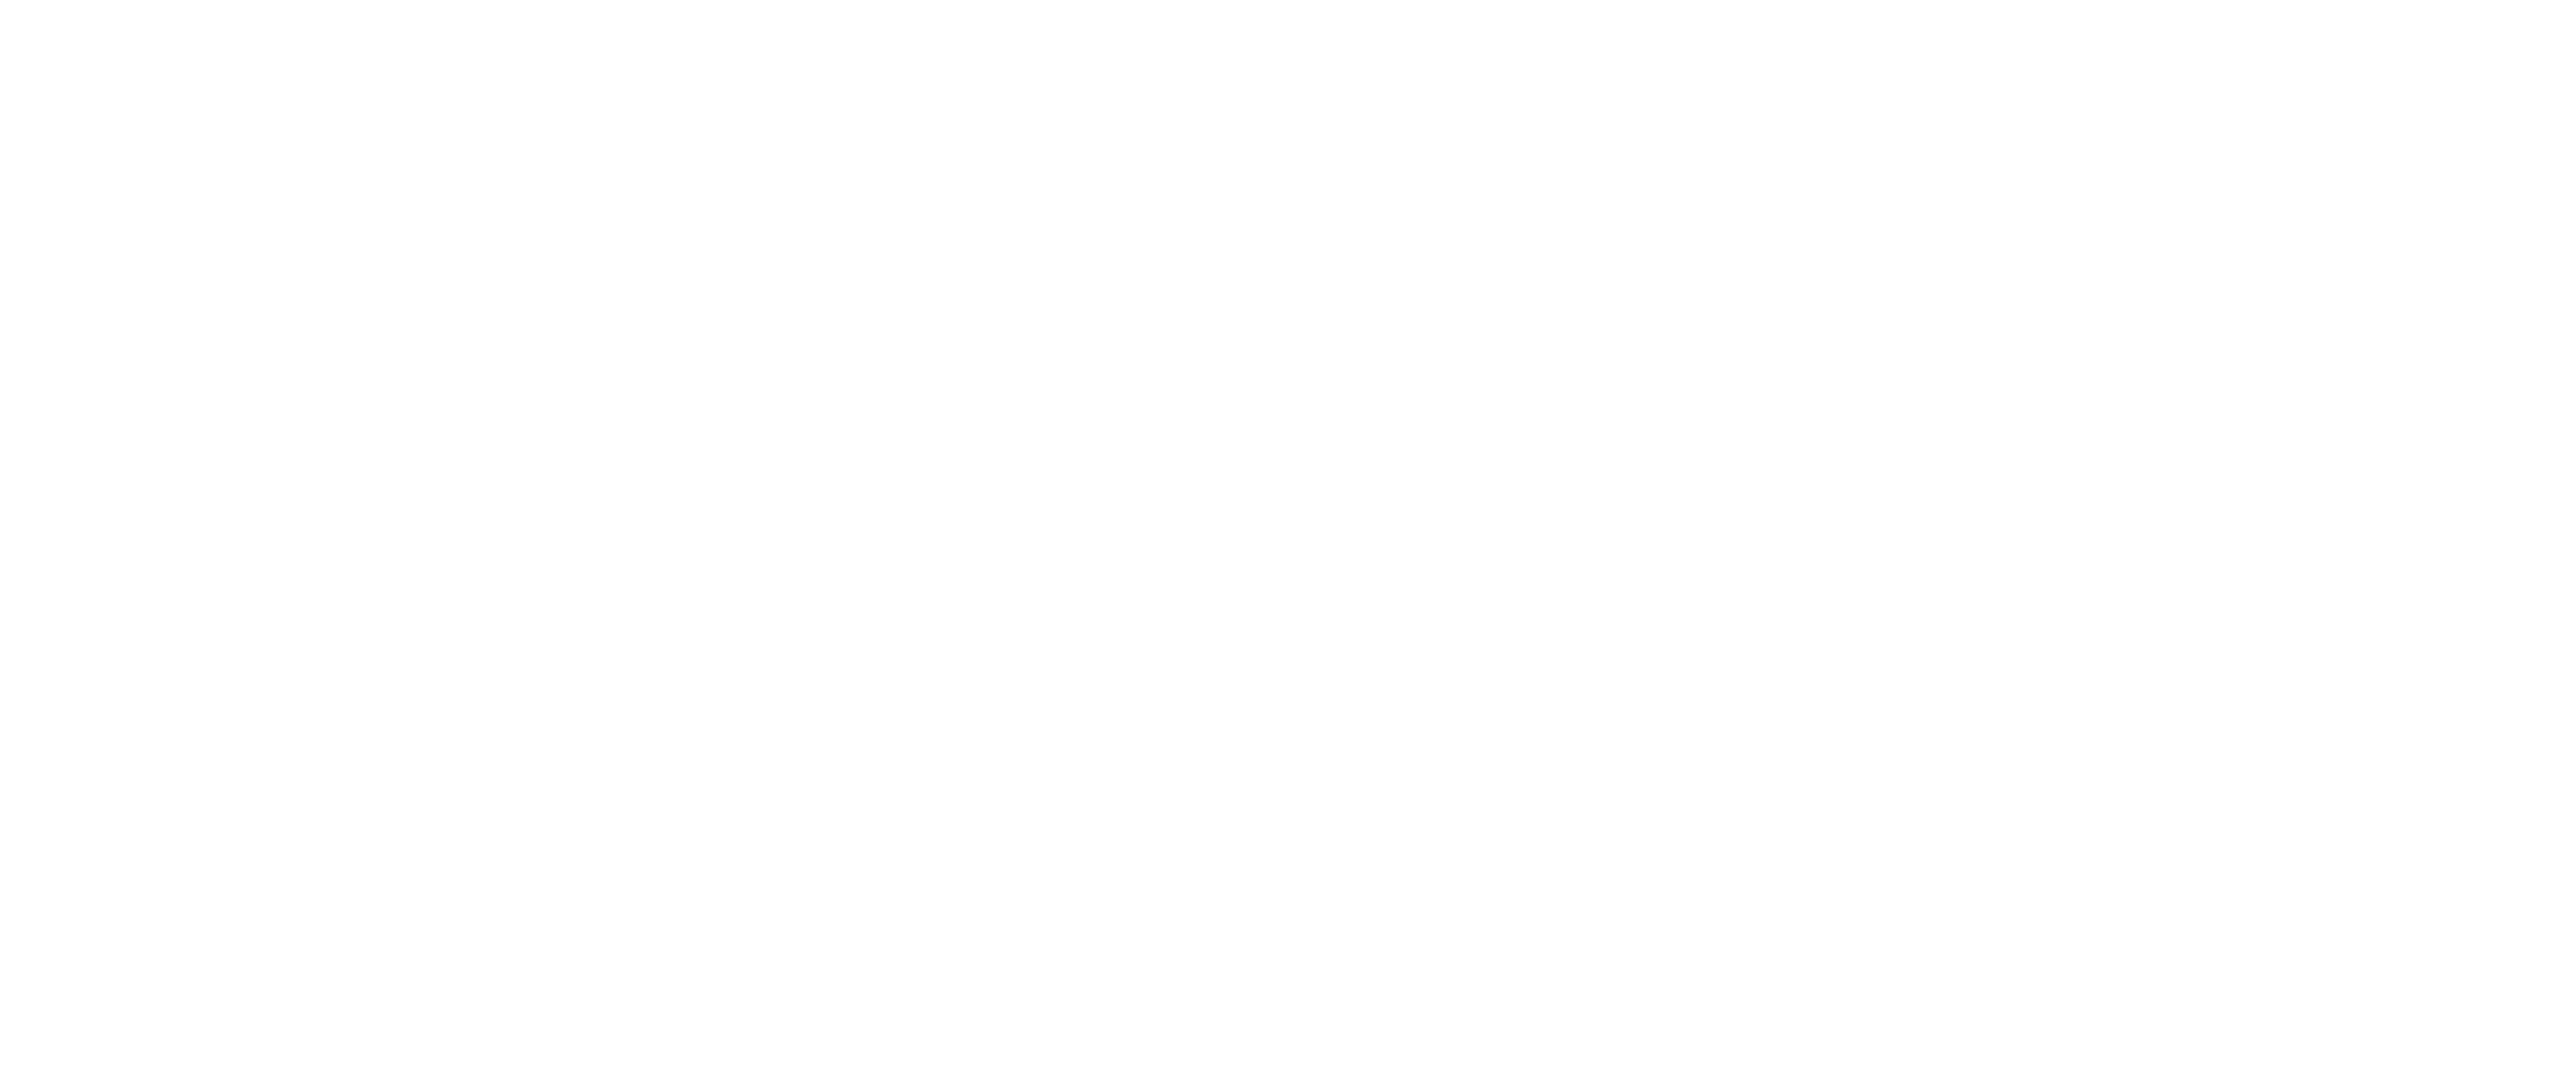 HRRA Logo White